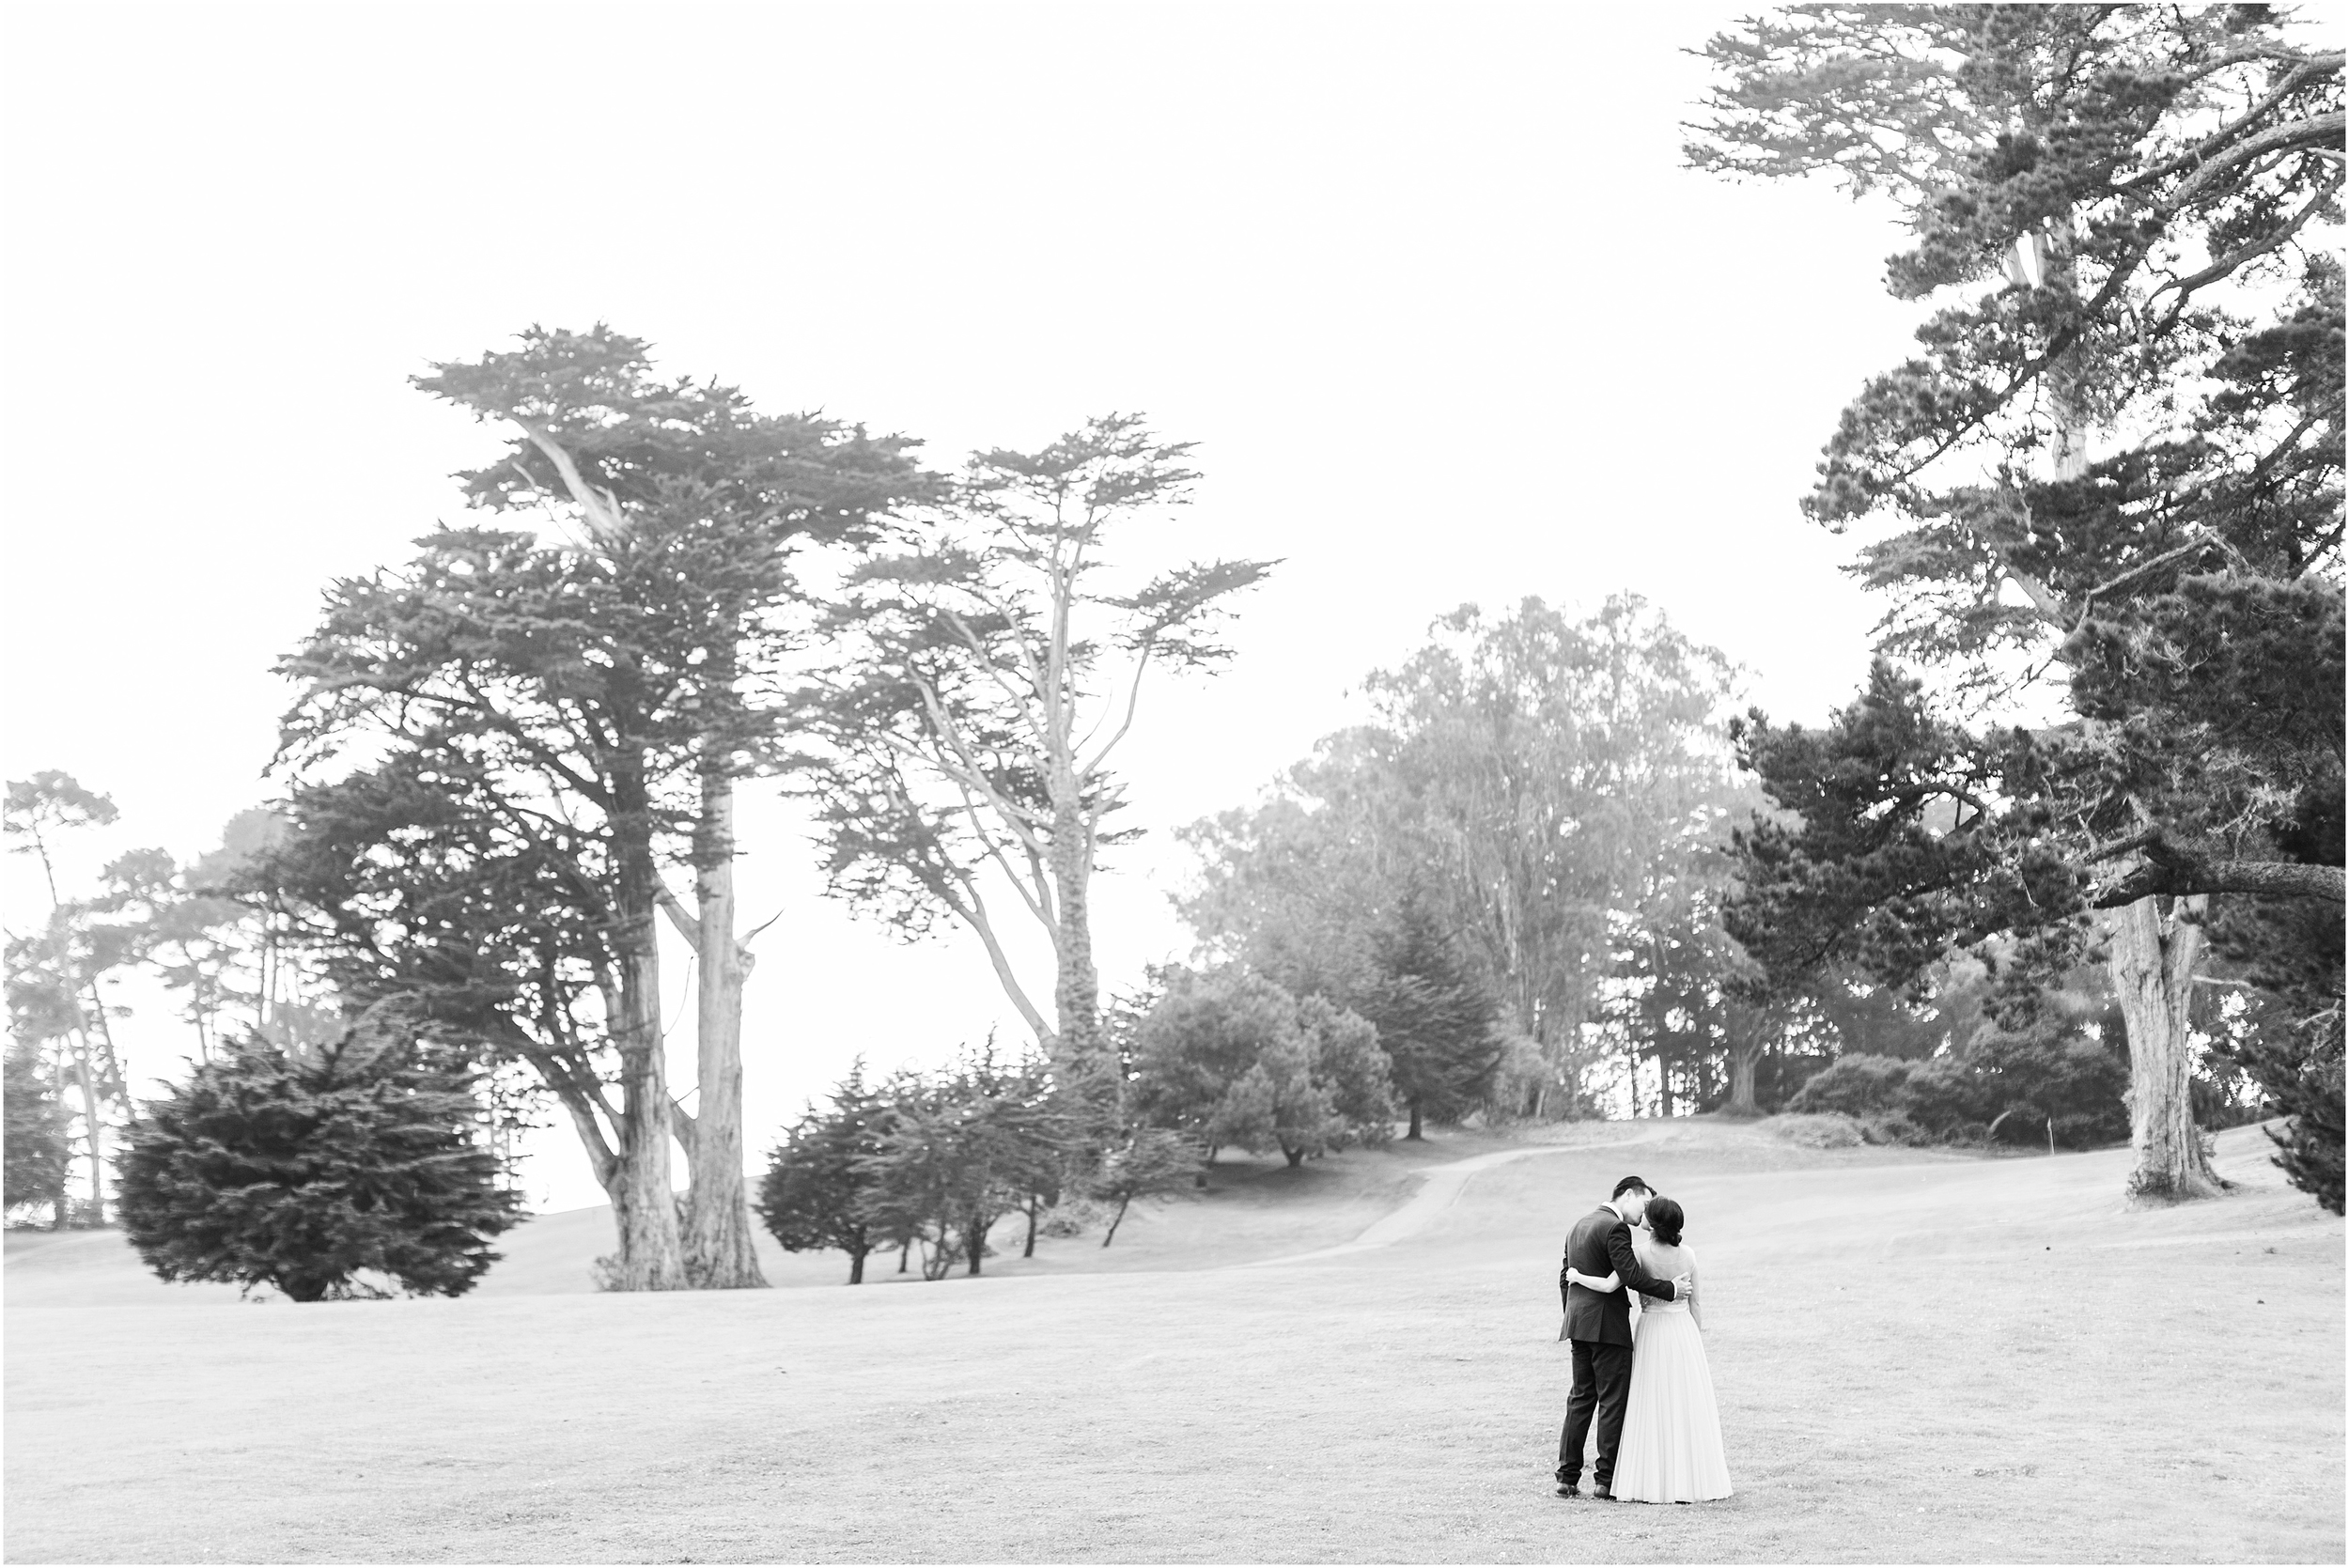 blueberryphotography.com | San Francisco Based Wedding & Lifestyle Photographer | Potrero Hill | San Francisco | Lands End